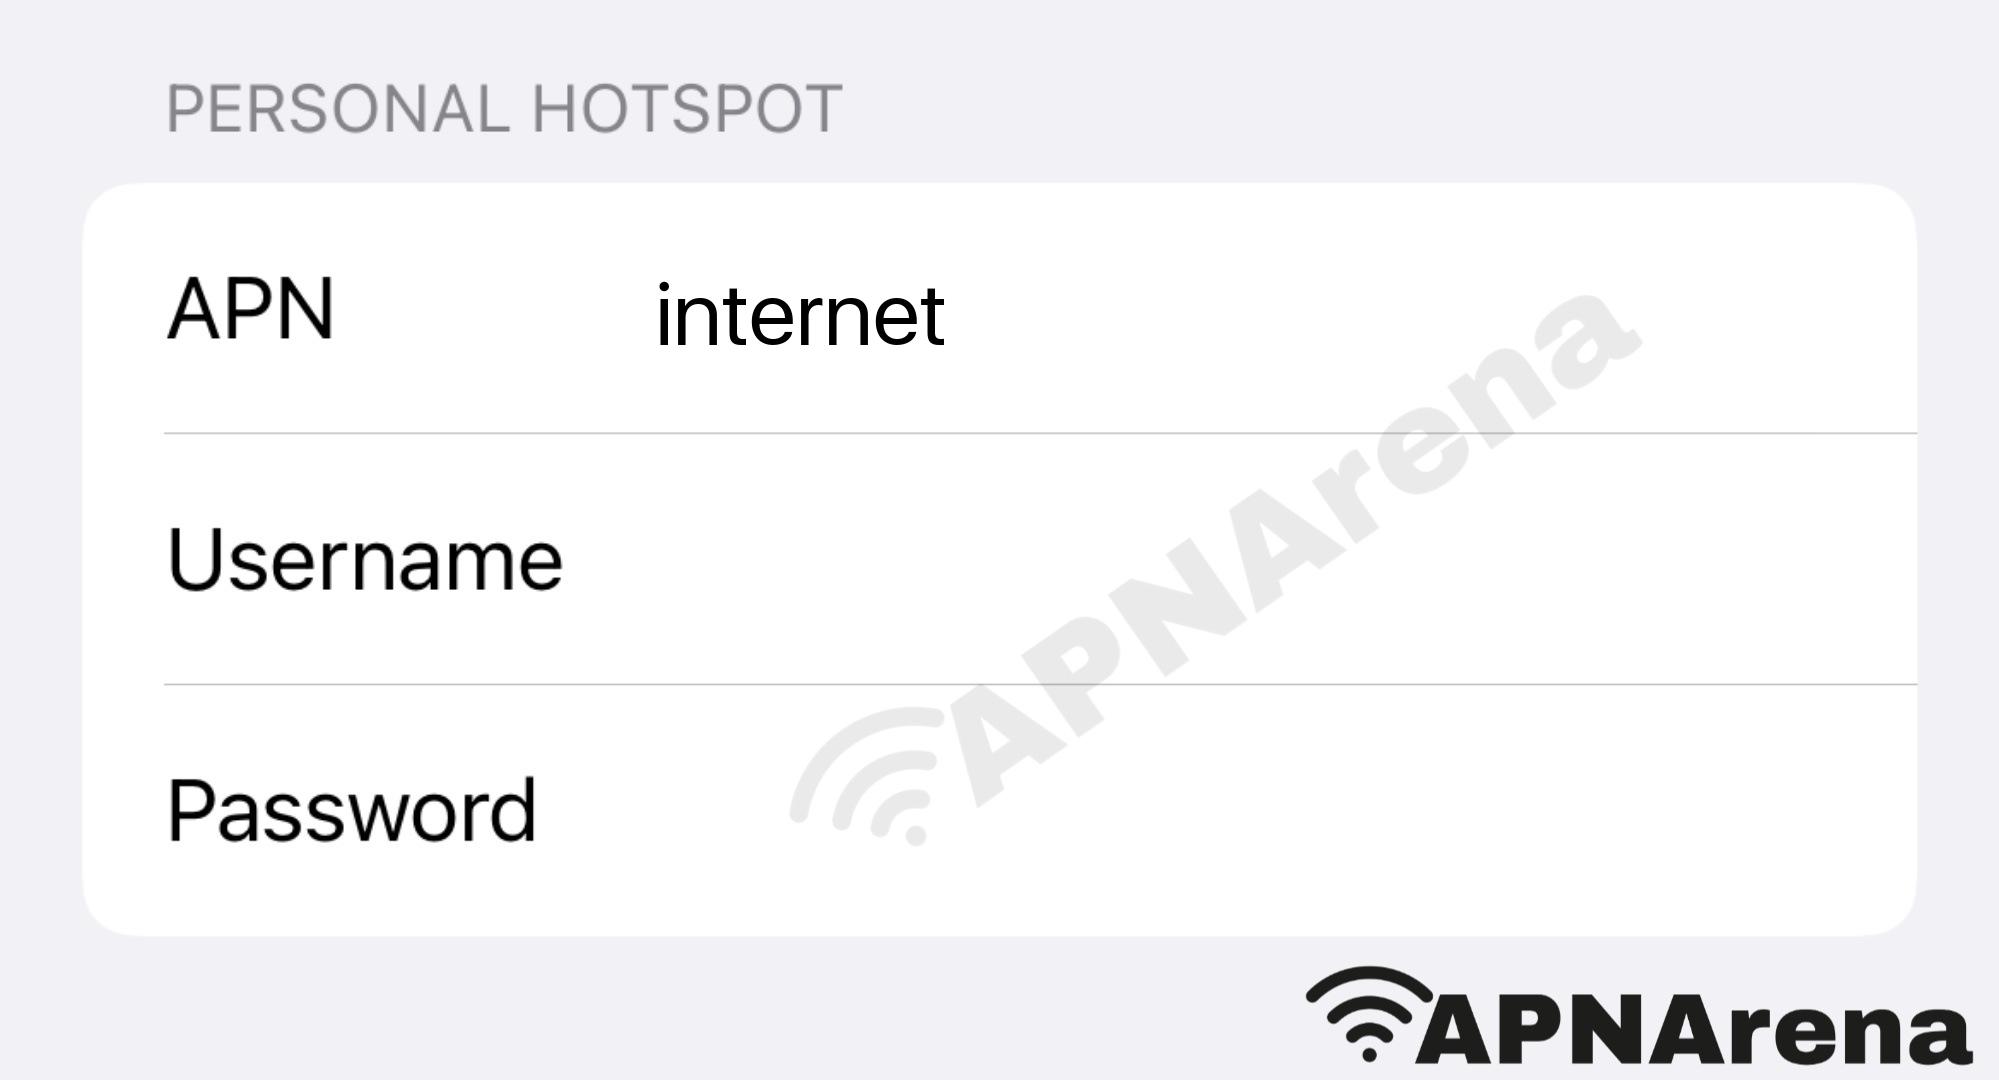 Vodafone Fiji Personal Hotspot Settings for iPhone